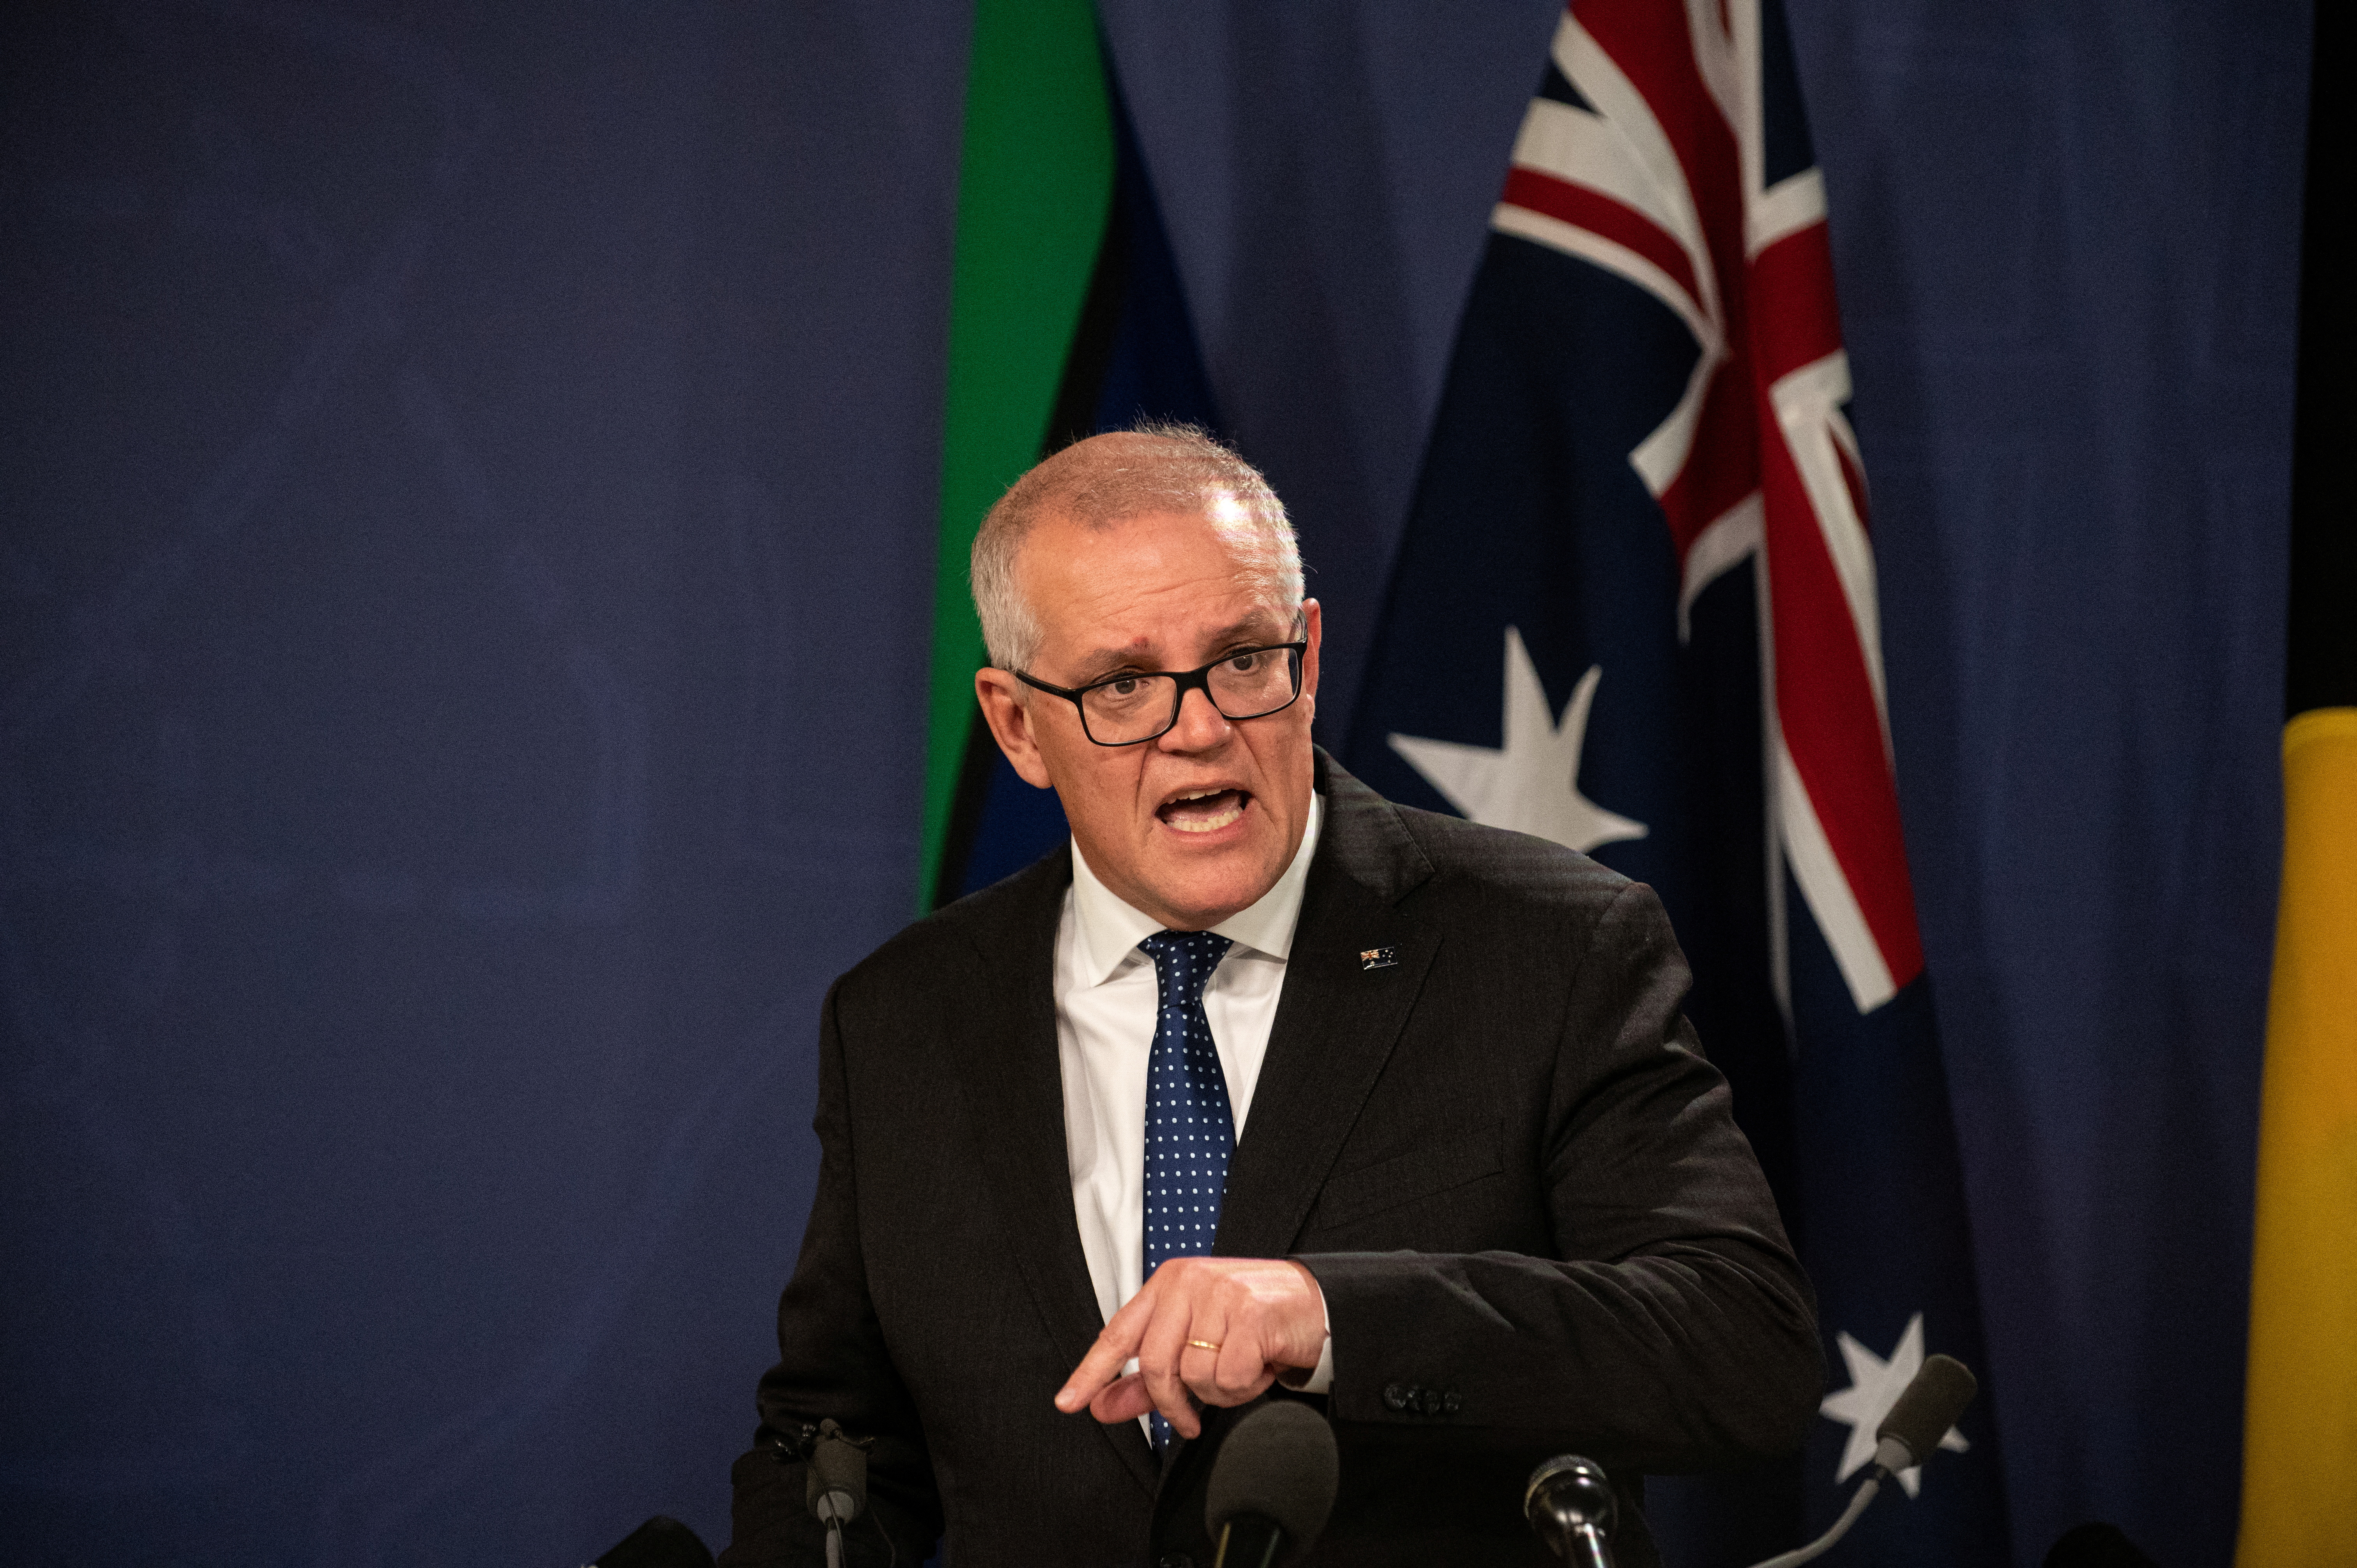 Former Australian Prime Minister Morrison speaks to media during a news conference in Sydney